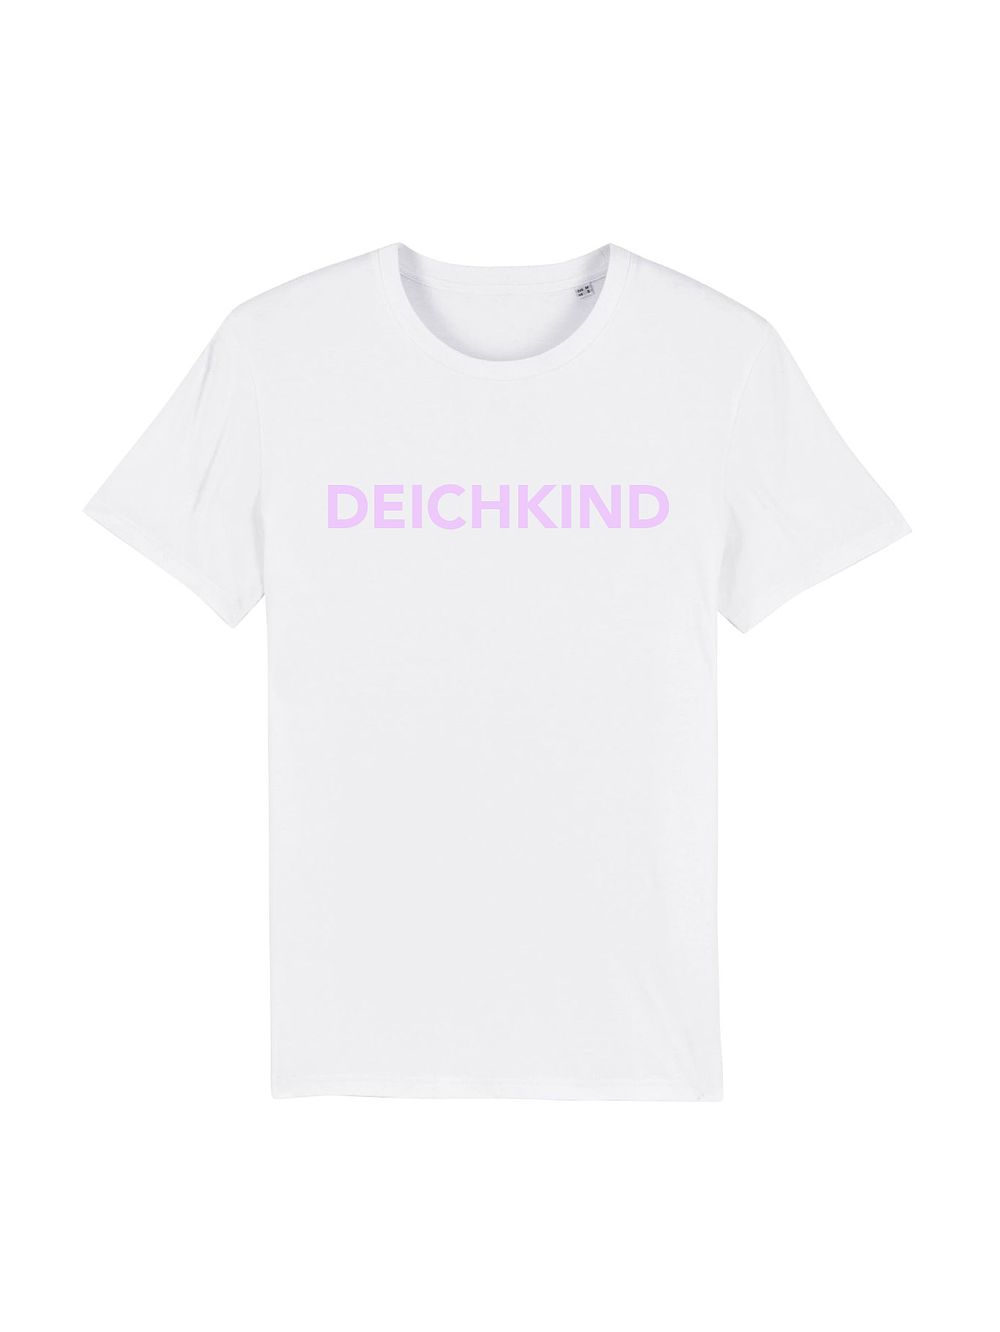 DEICHKIND - T-Shirt - Schriftzug - Weiß/Rosa